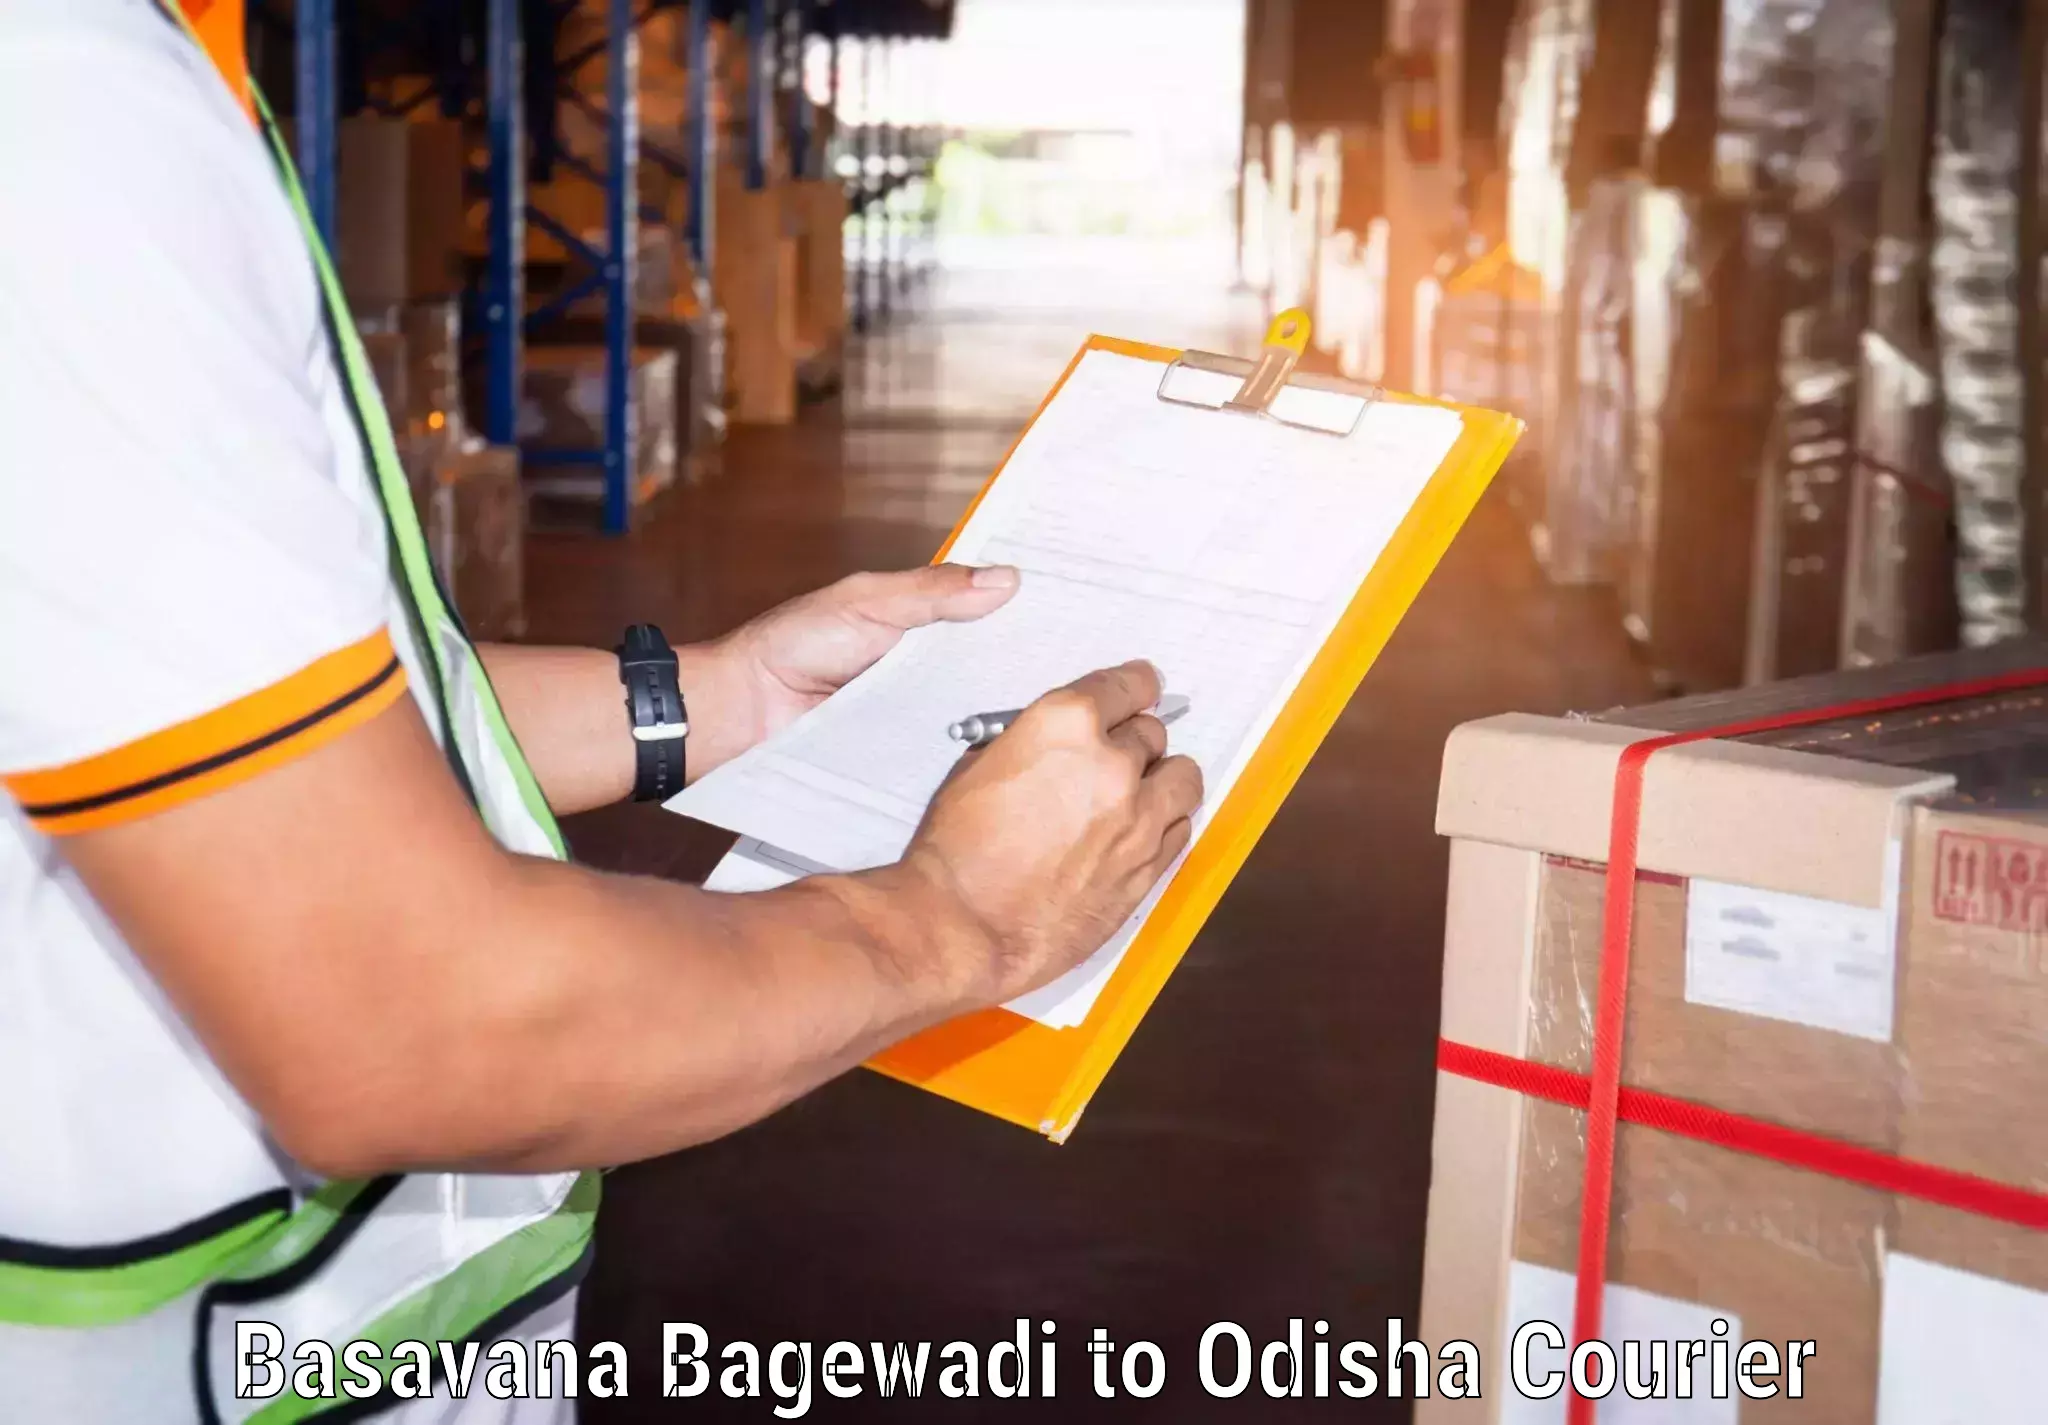 Fast delivery service Basavana Bagewadi to Mangalpur